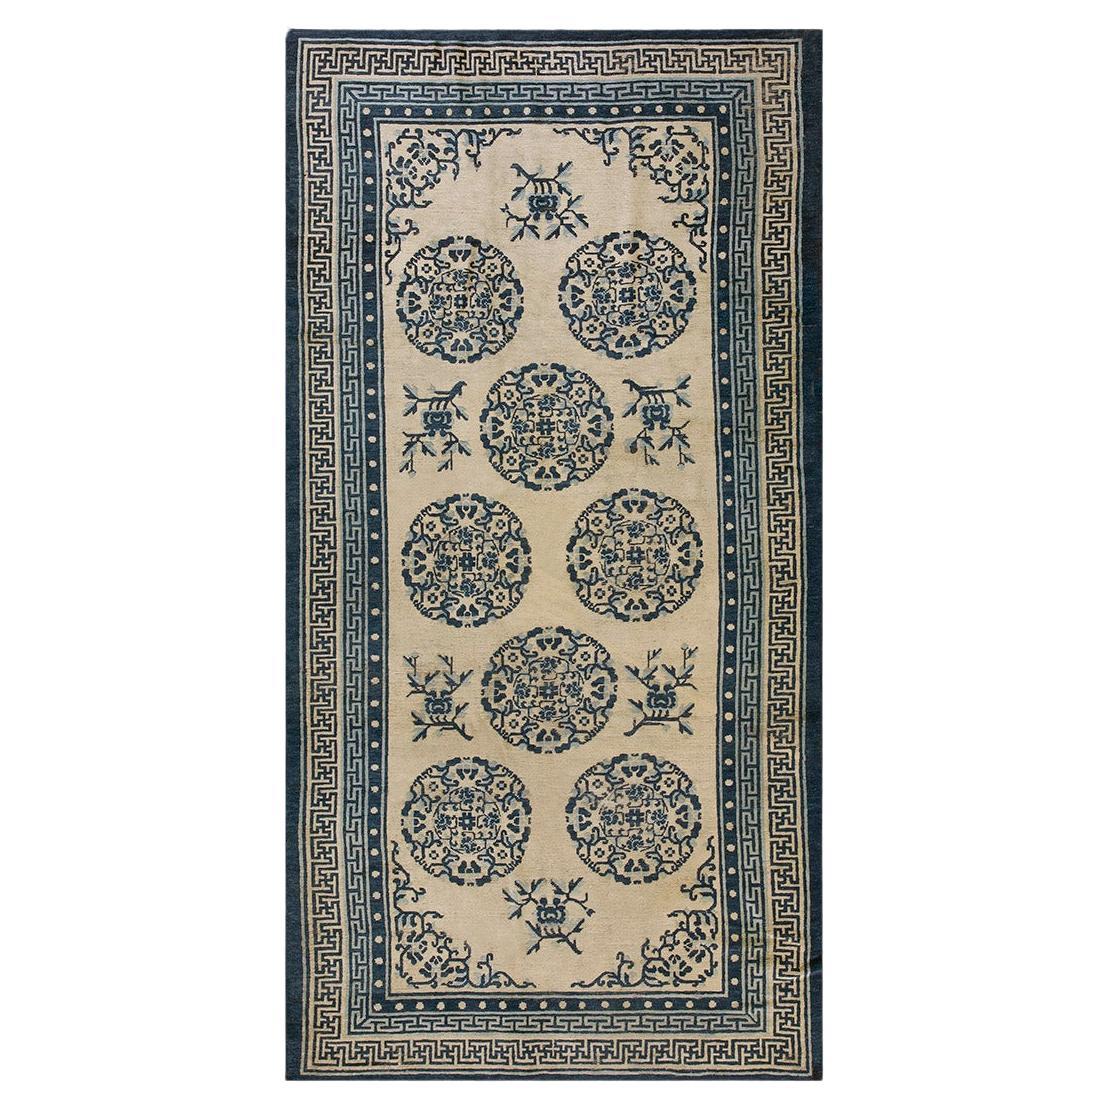 Mid 19th Century Chinese Ningxia Carpet ( 5'2" x 10'2" - 157 x 310 )